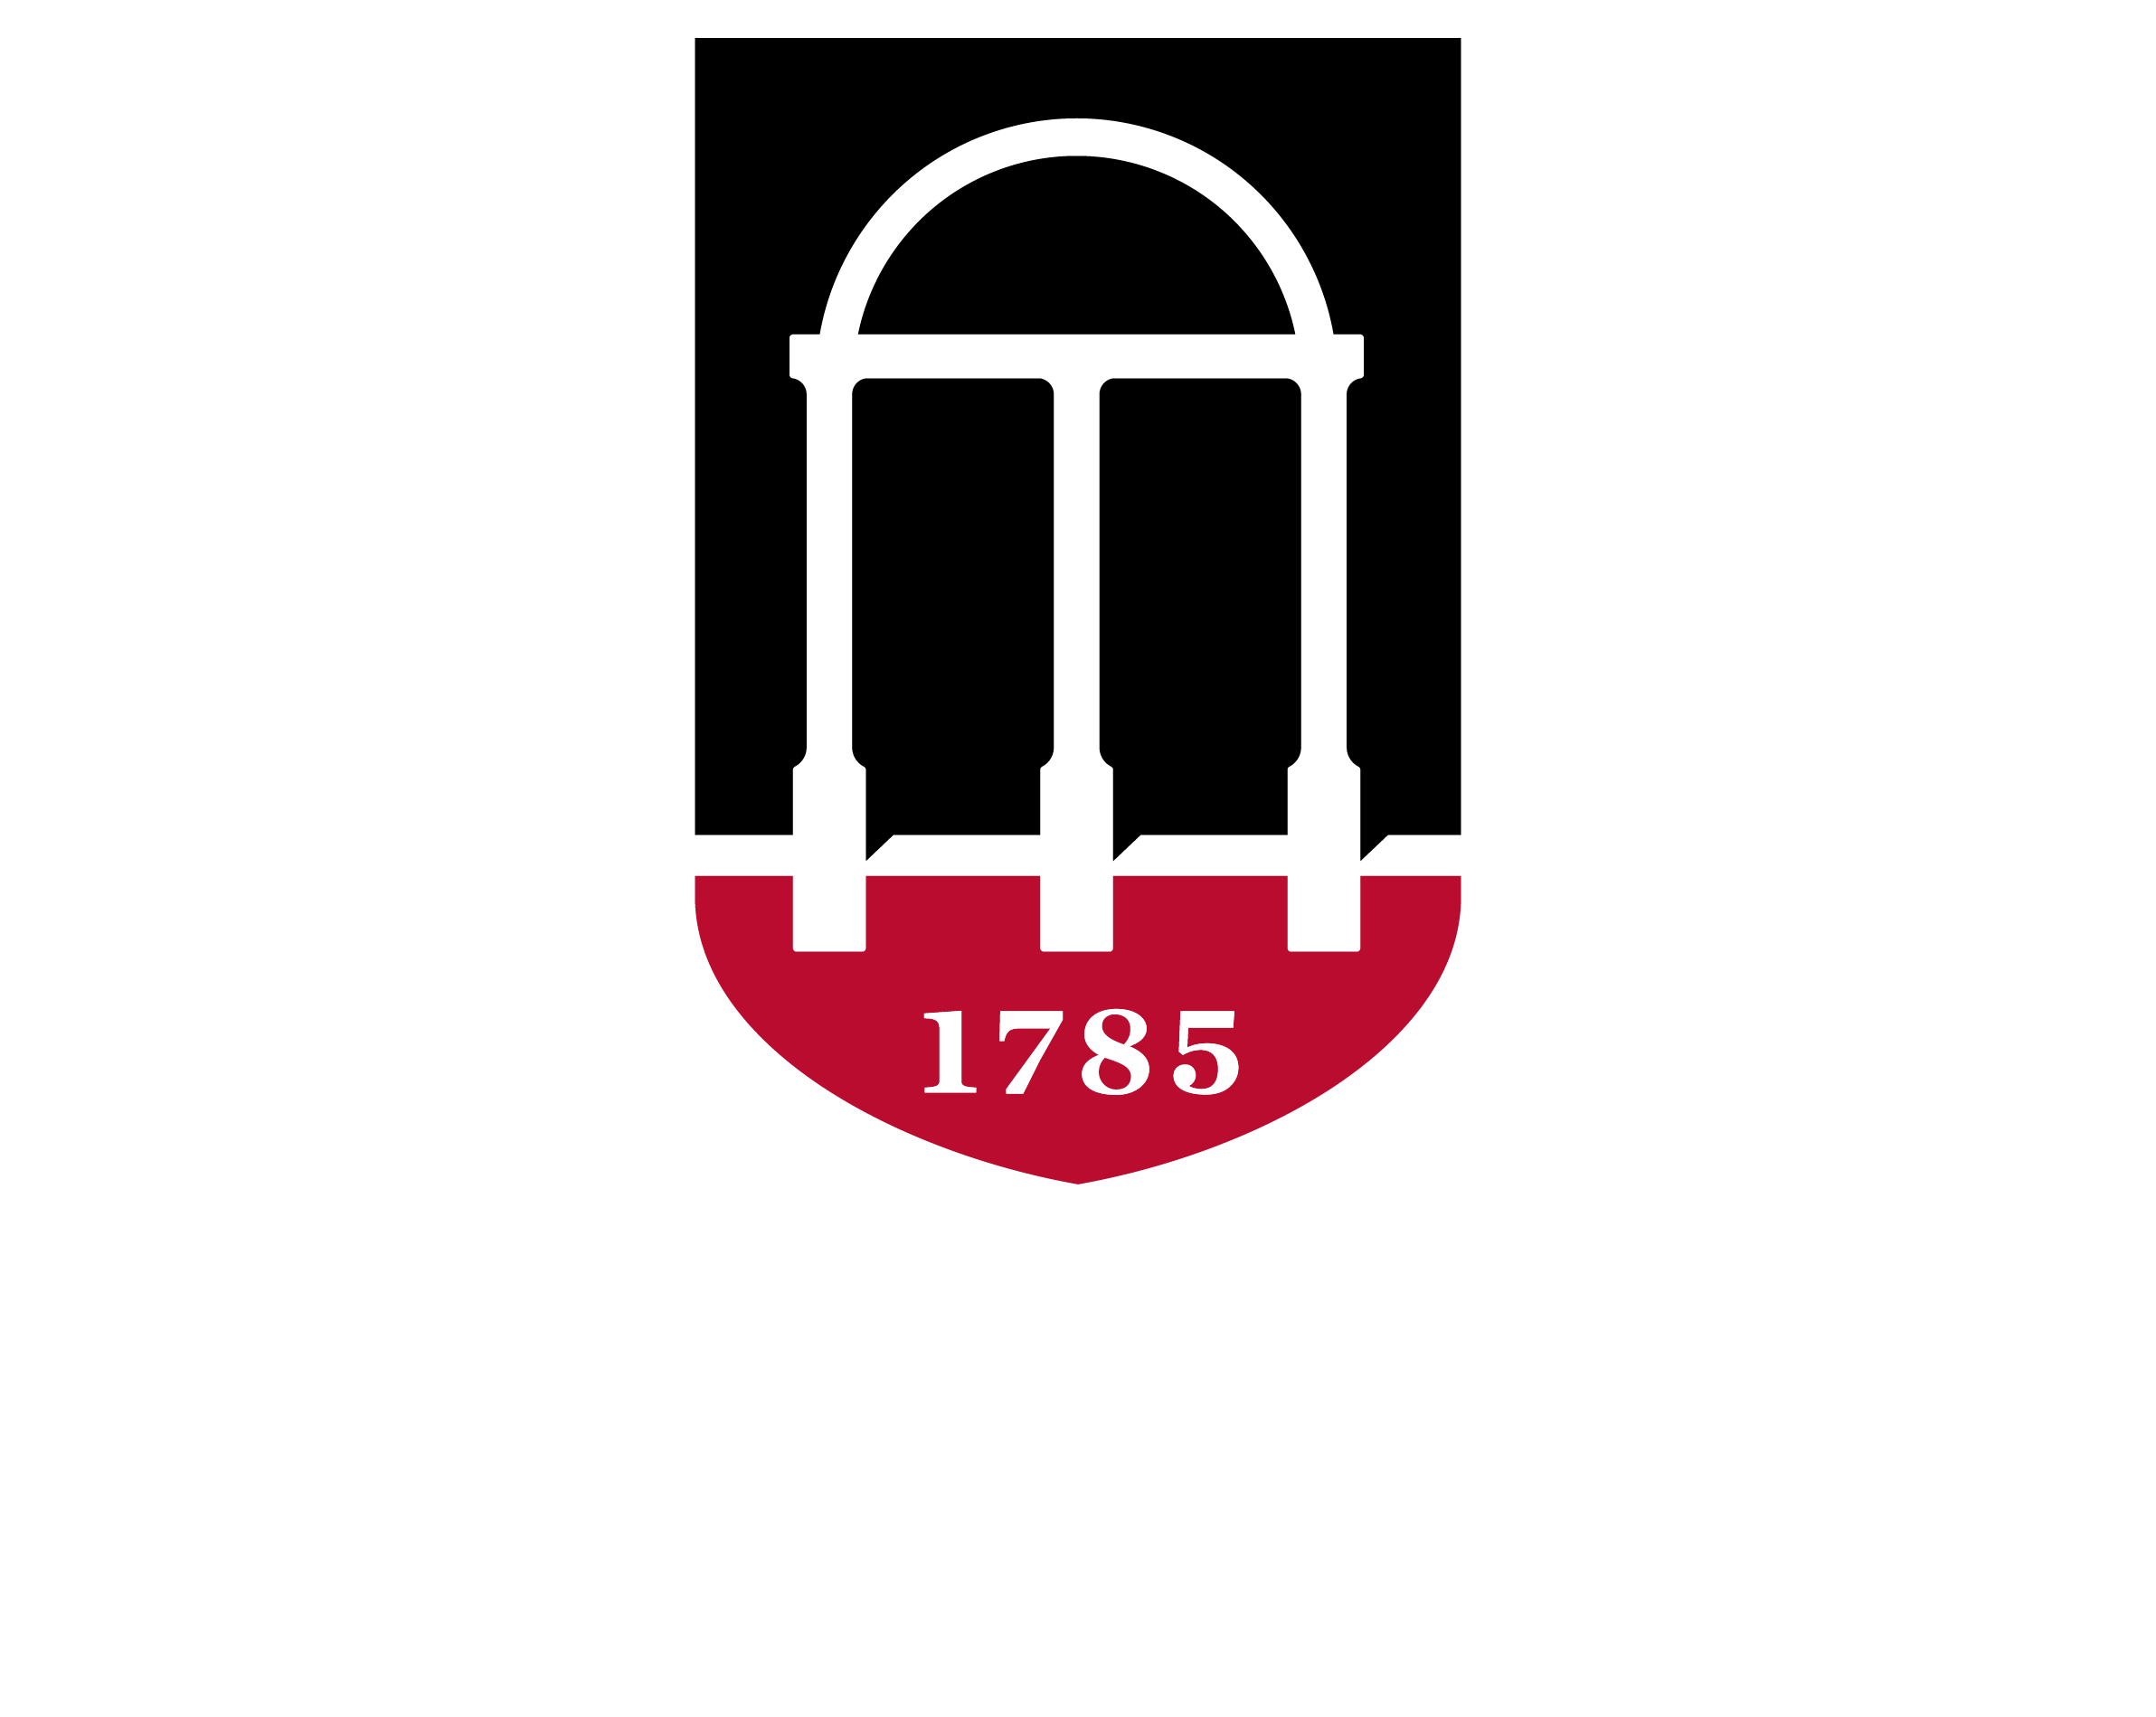 University of Georgia logo, vertically-aligned